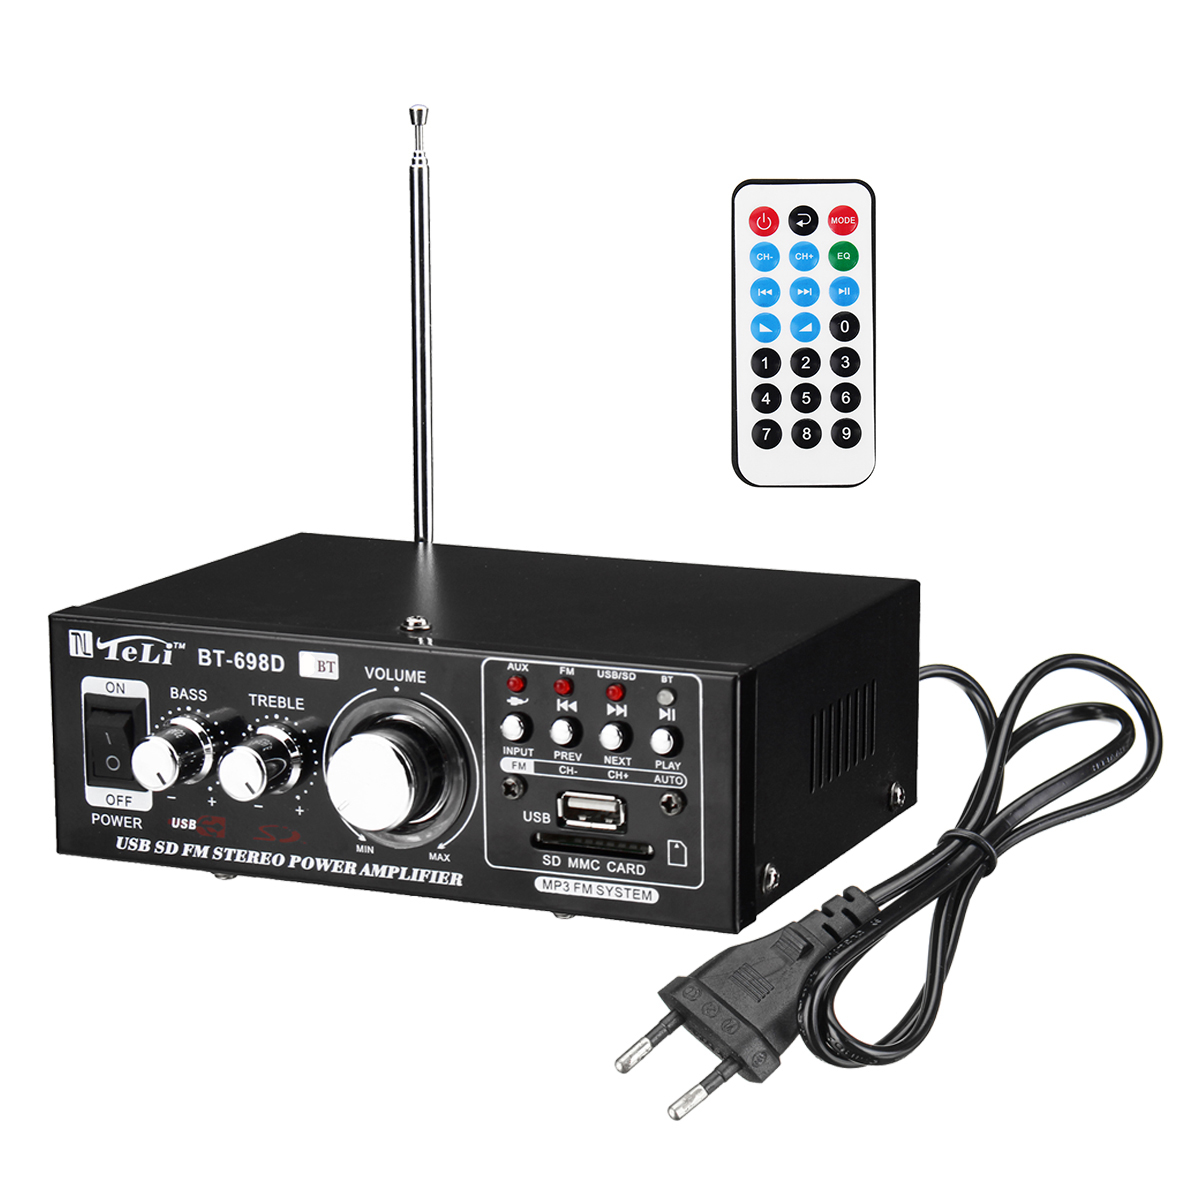 USB-SD-HIFI-Power-Amplifier-HiFi-Digital-Audio-Stereo-Amplifier-bluetooth-FM-Radio-Equipment-1423186-6